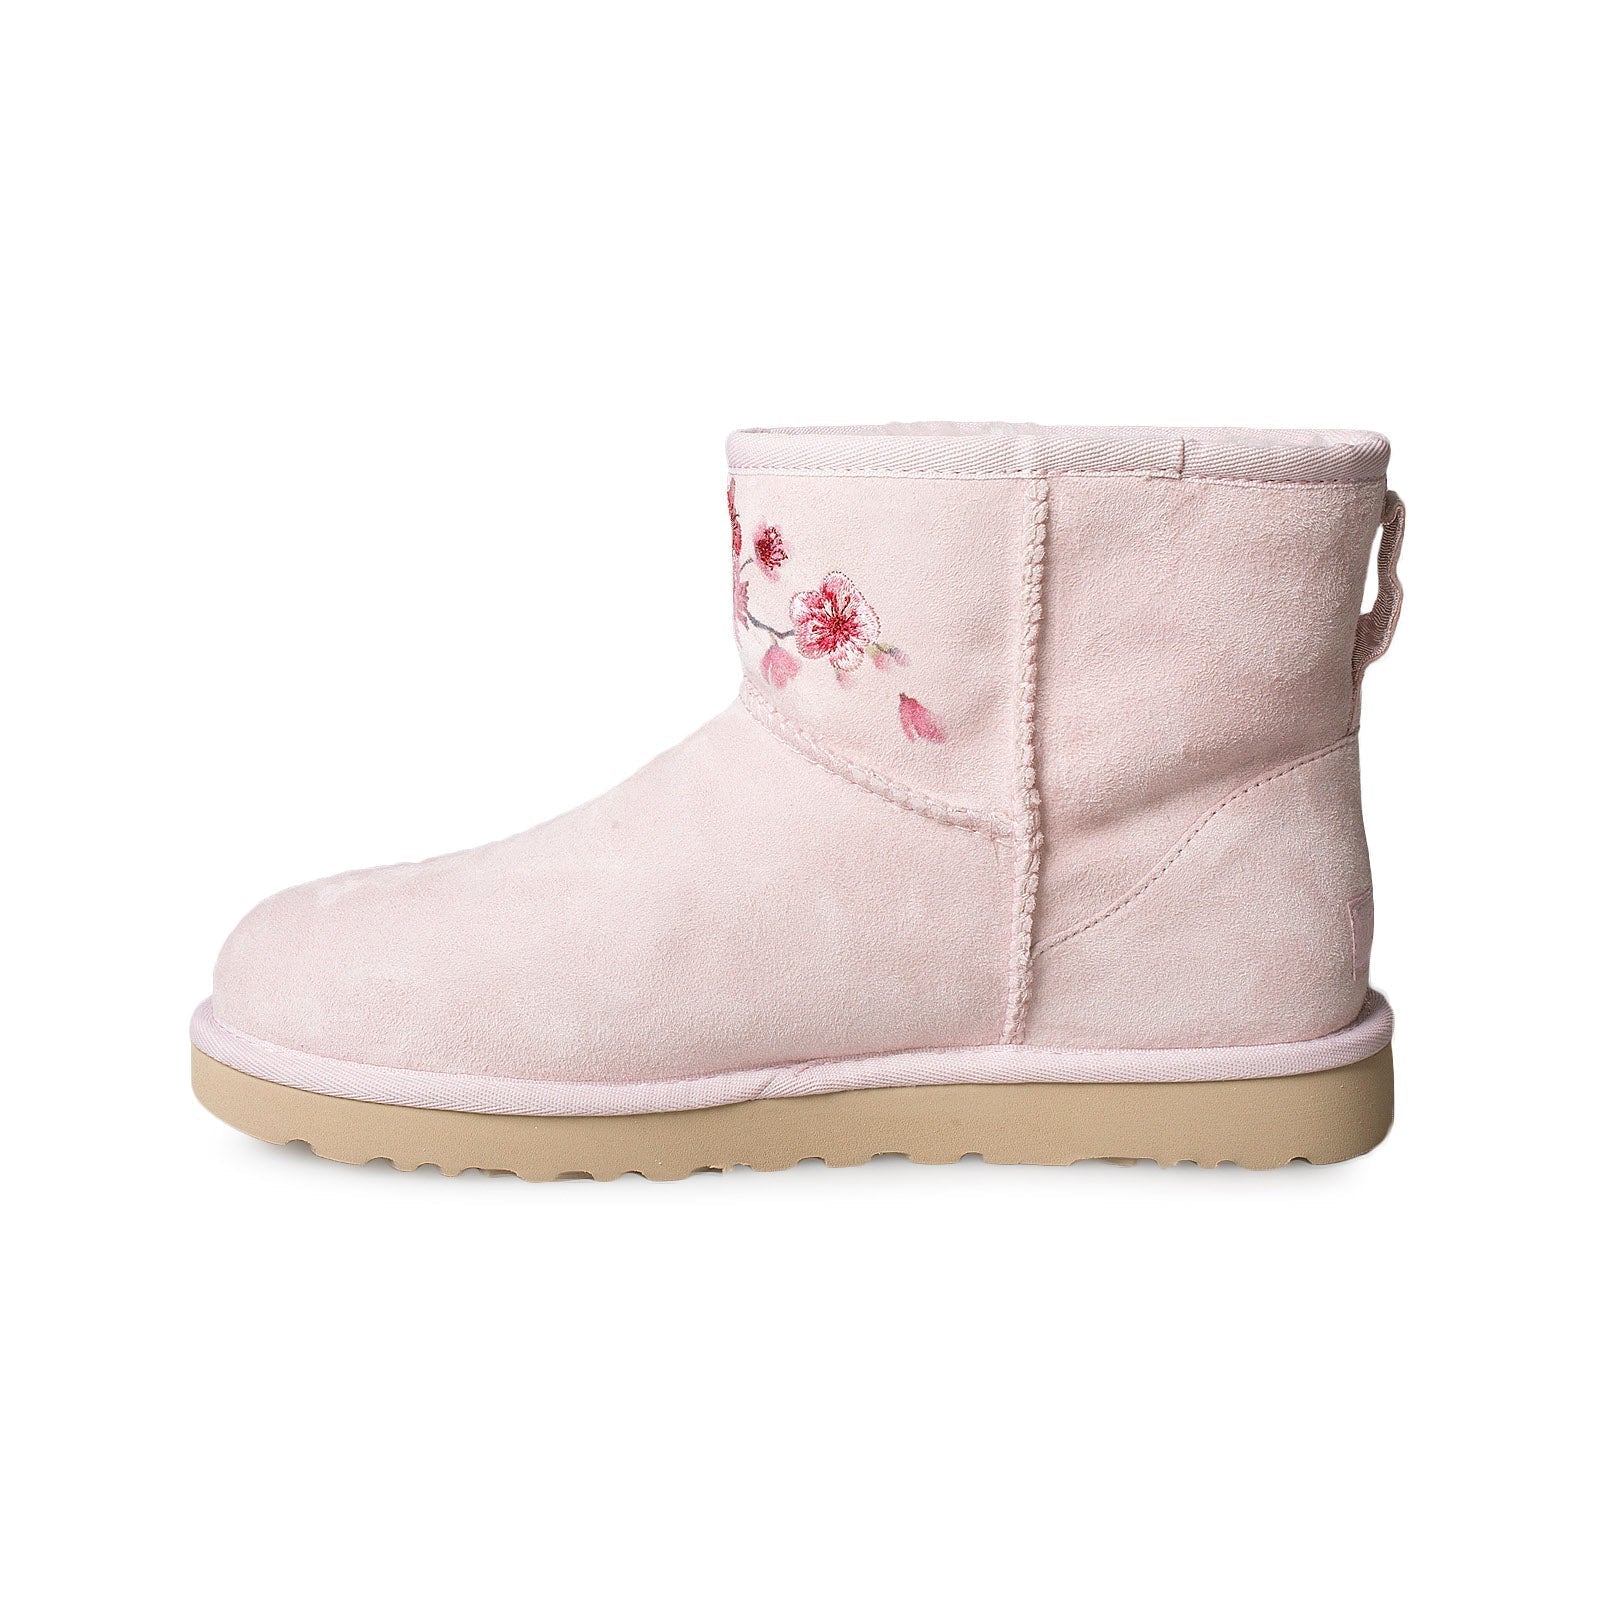 UGG Classic Mini Blossom Seashell Pink Boots - Women's